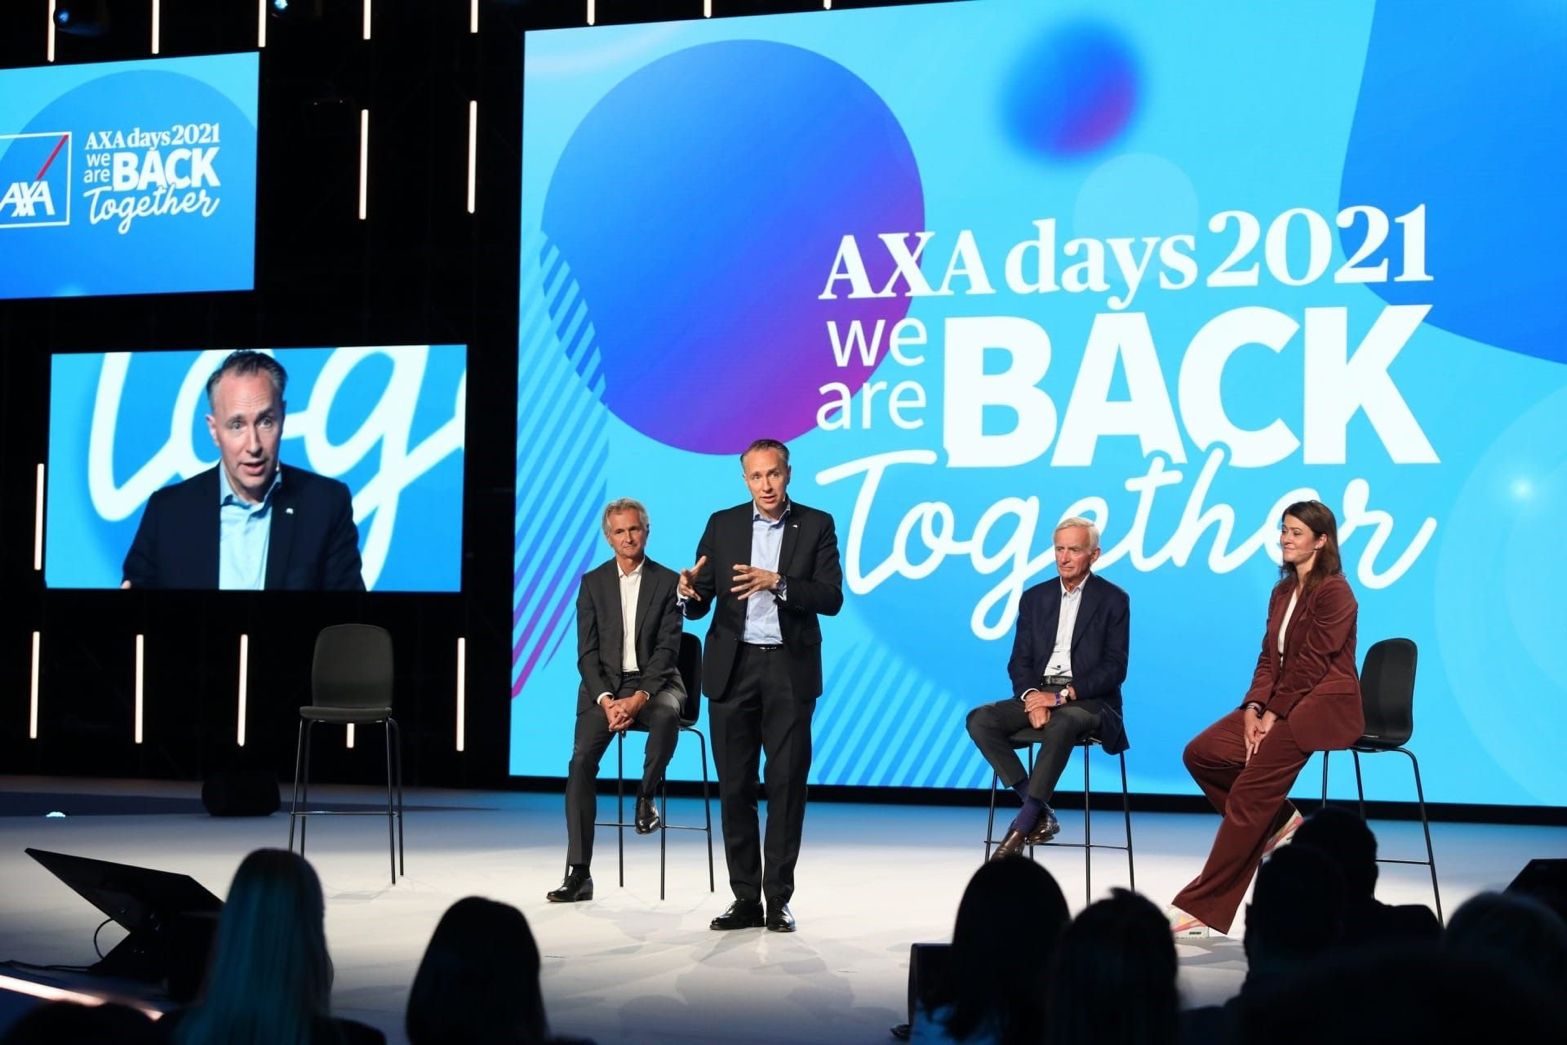 AXA Days 2021-axadays-deco evenementielle-prestataire technique et deco-audiovisuel-aucop-evenement-evenementiel-ecran-moquette-cloison-fond vert